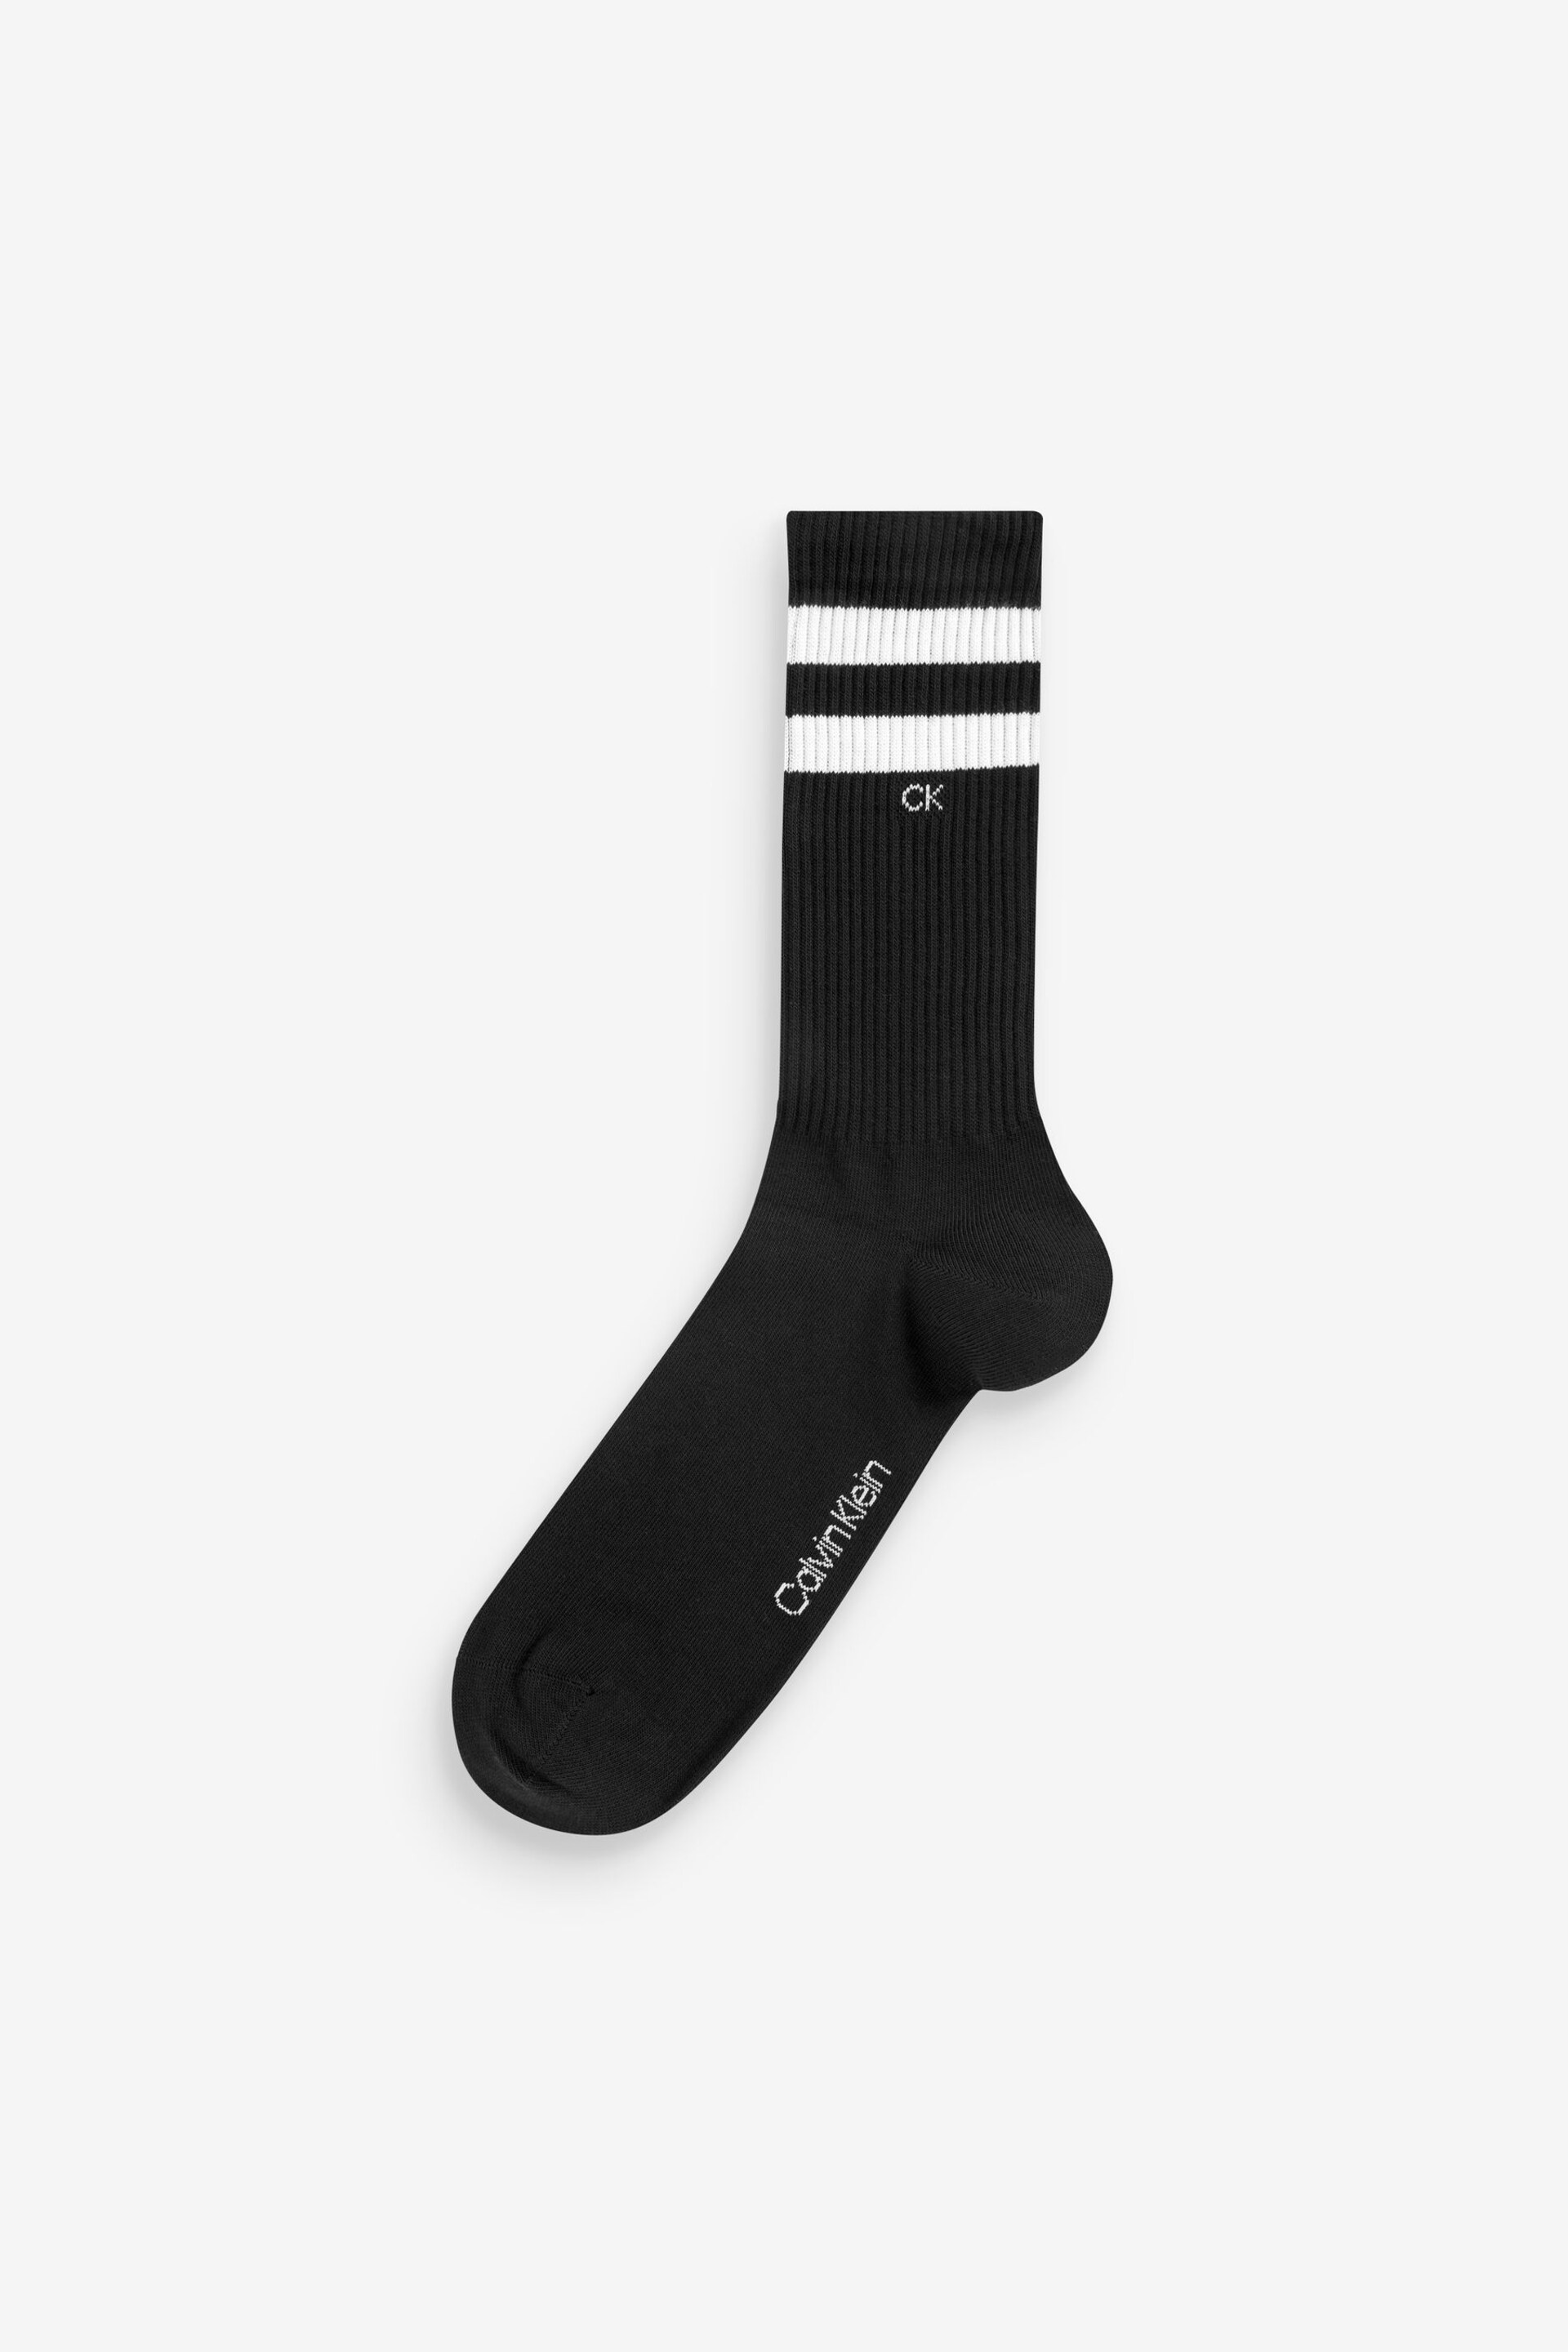 Calvin Klein Black Mens Stripe Socks 2 Pack - Image 3 of 3